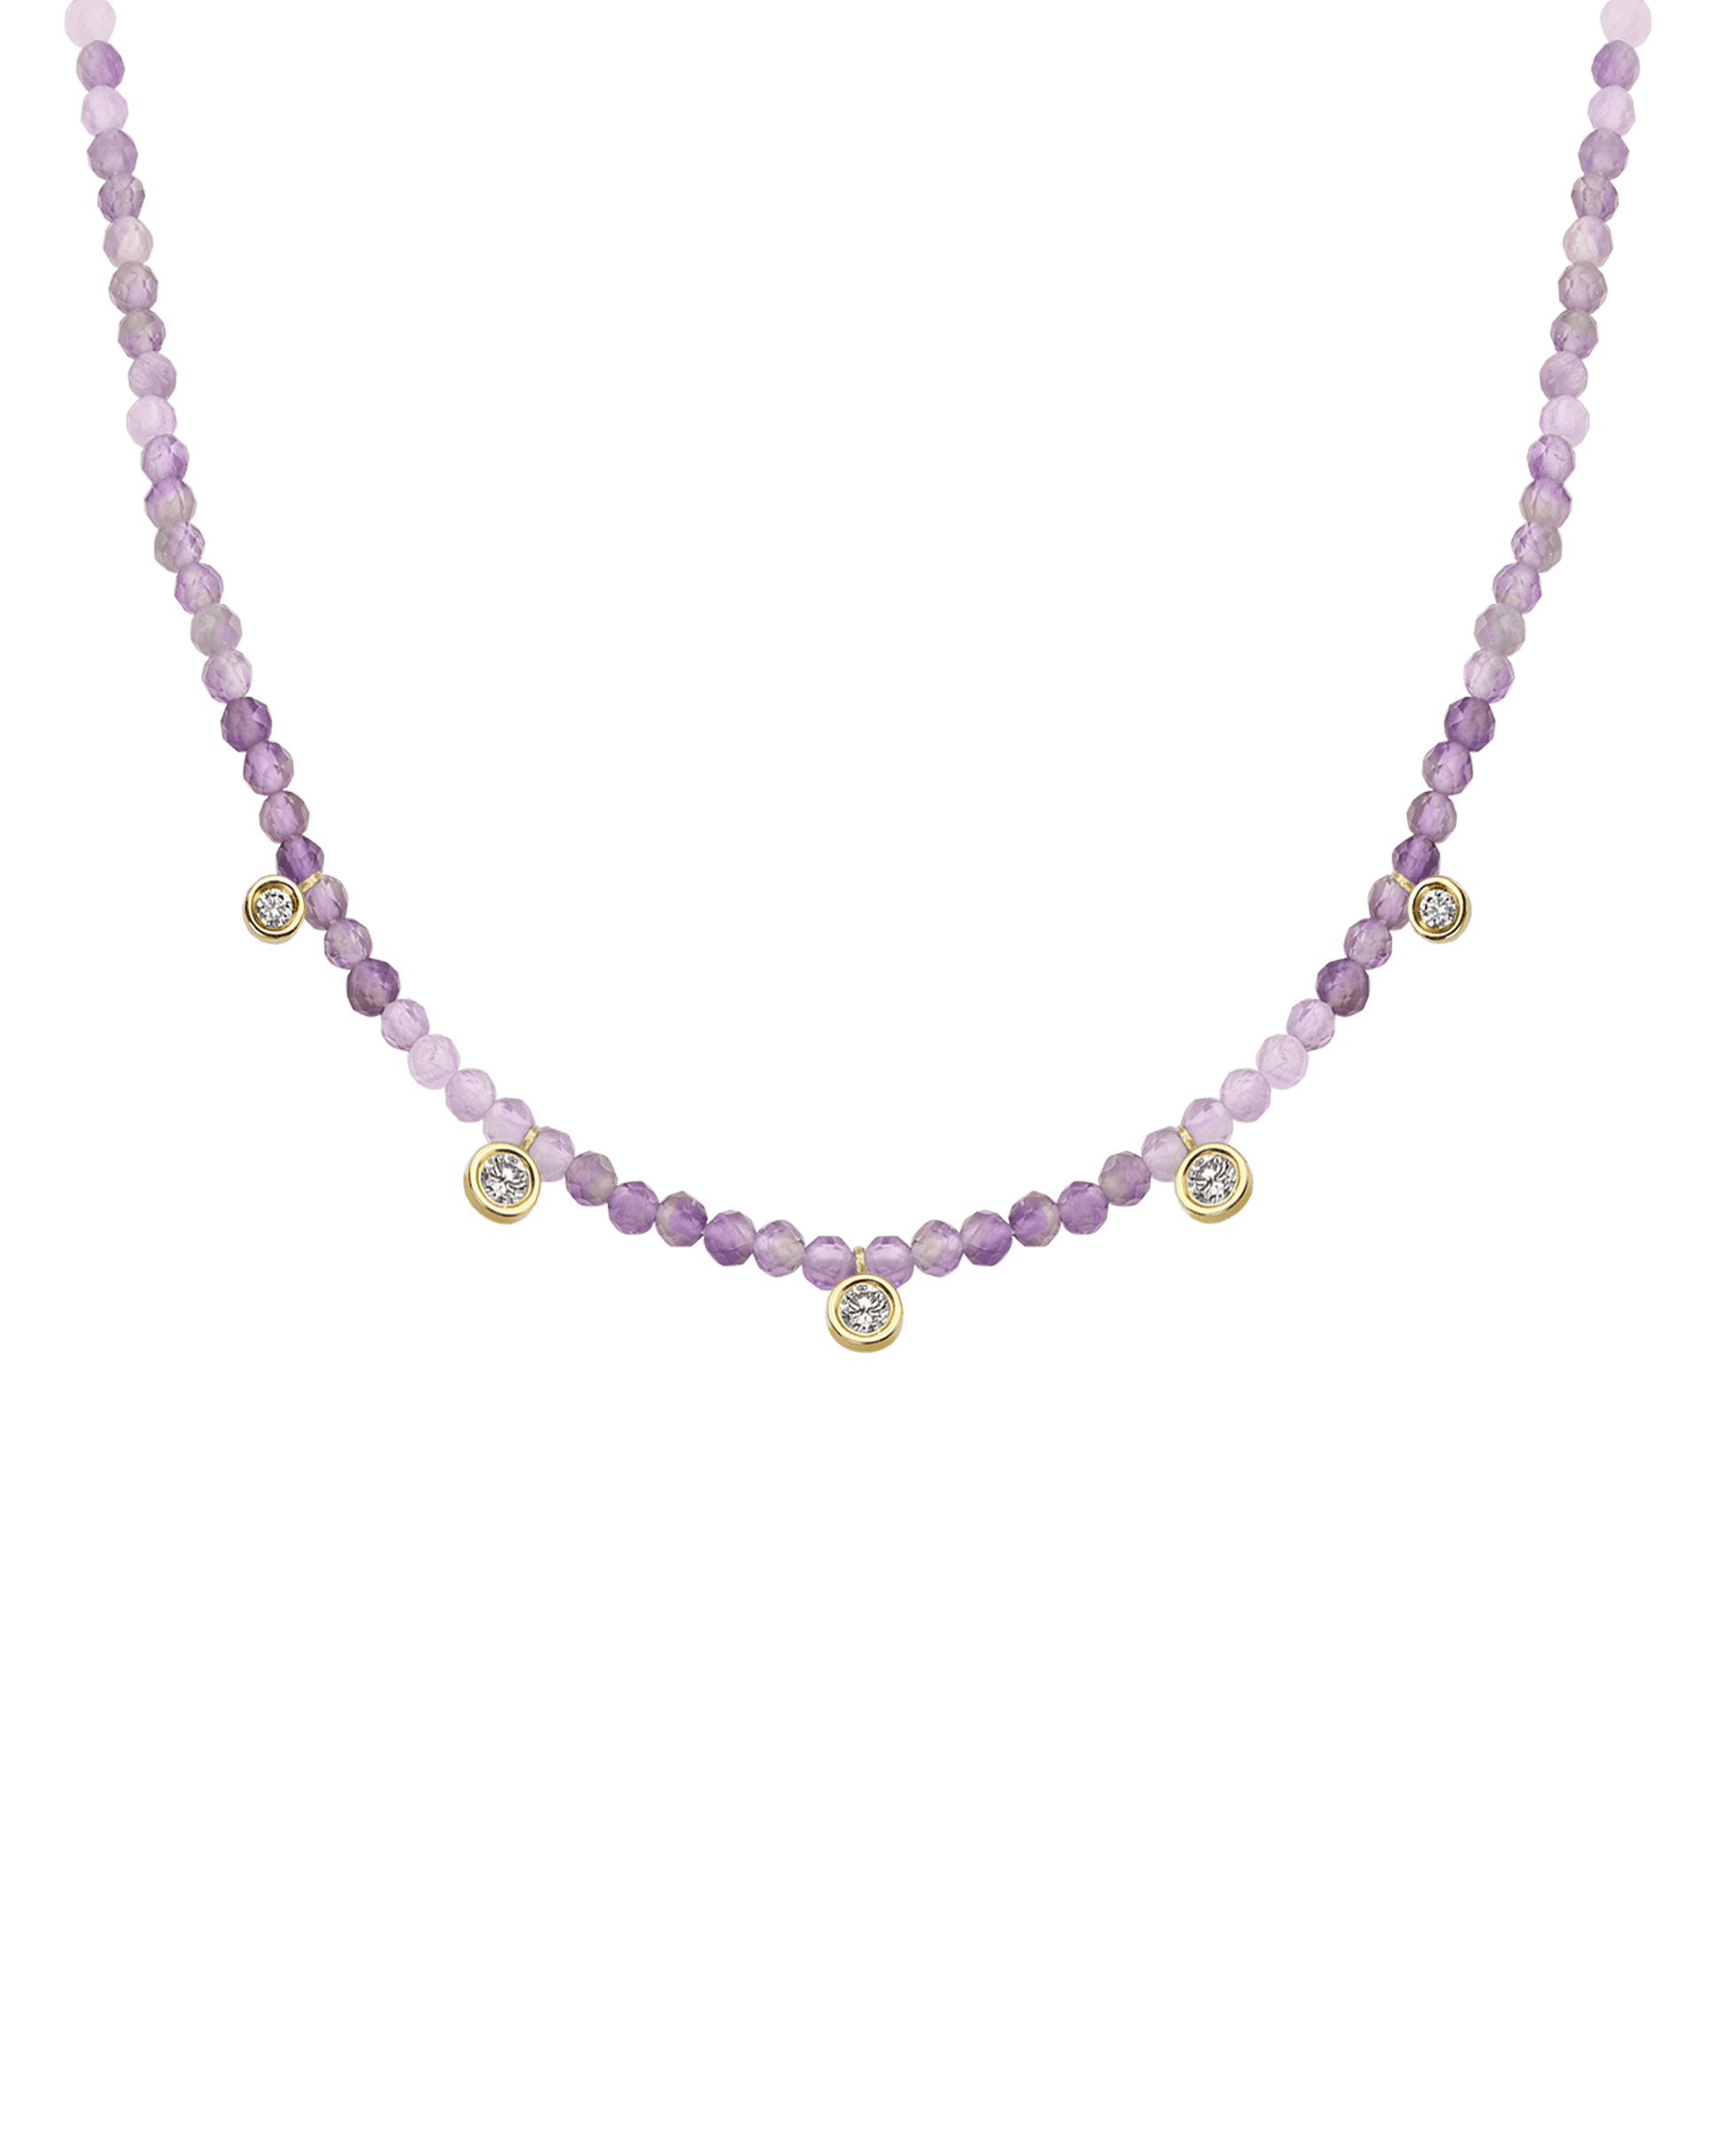 Emerald Gemstone & Five diamonds Necklace - 14K White Gold Necklaces magal-dev 